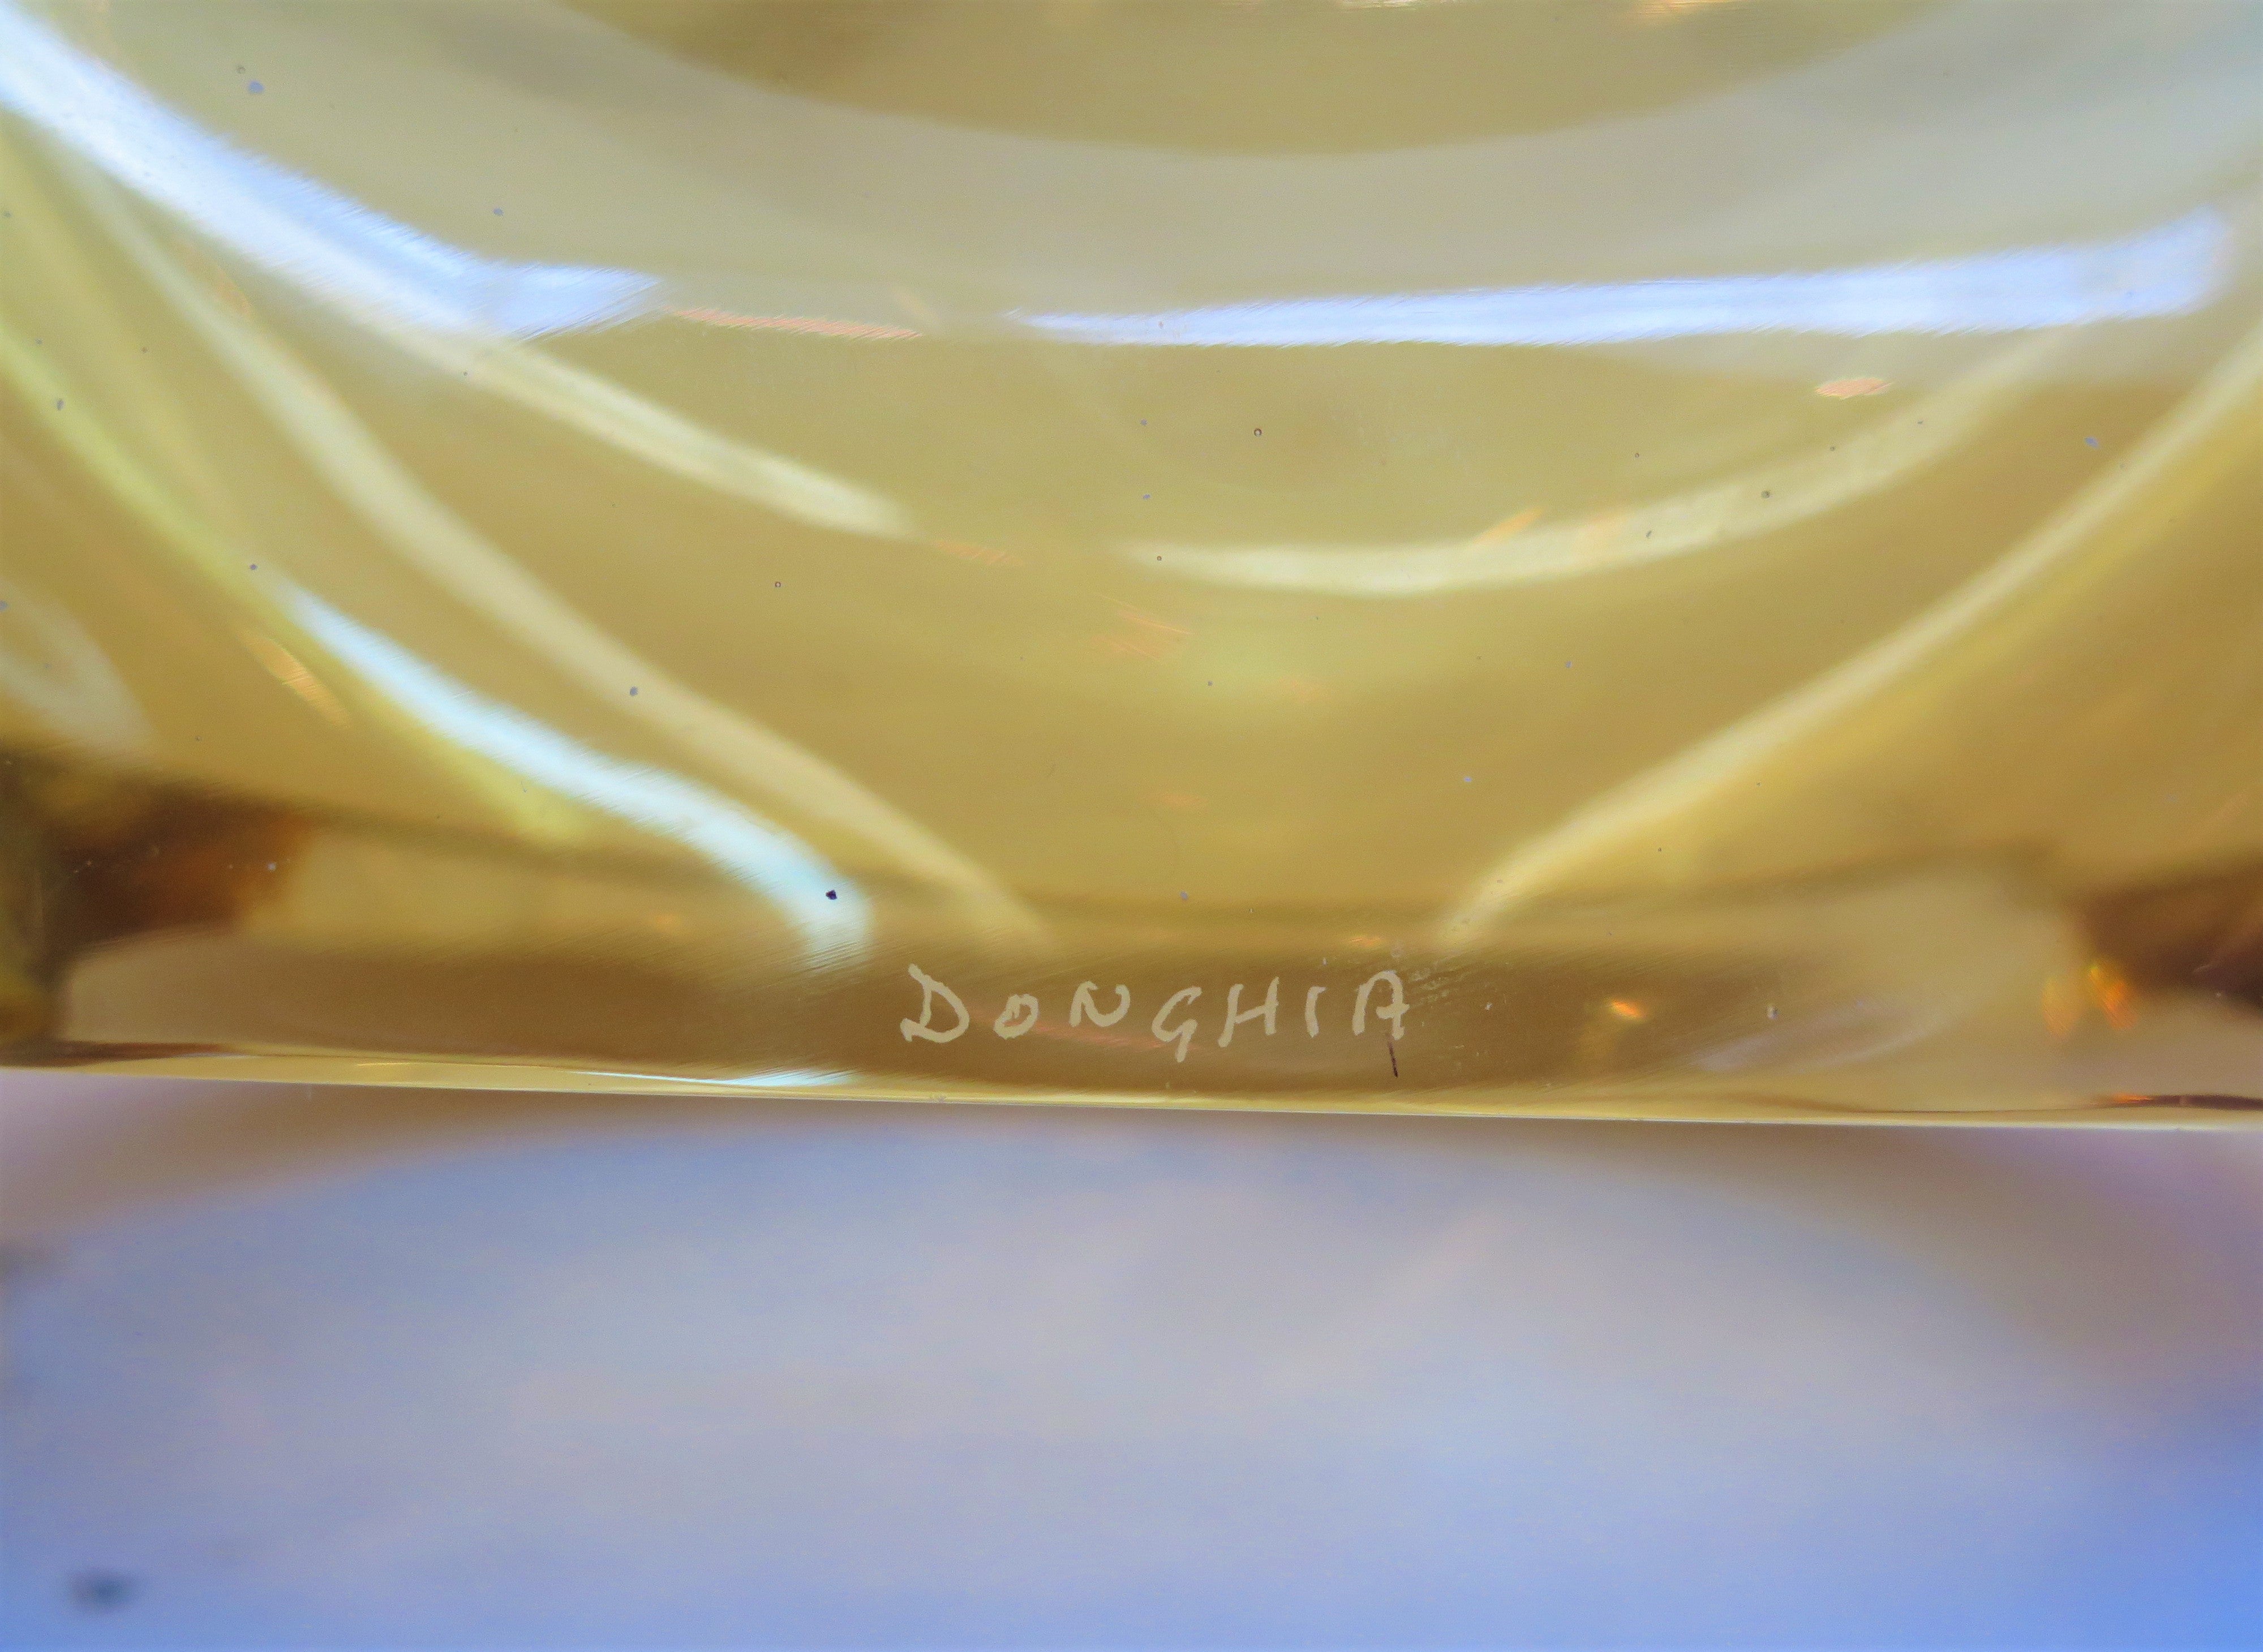 Donghia Venetian Glass "Alba" Table Lamp